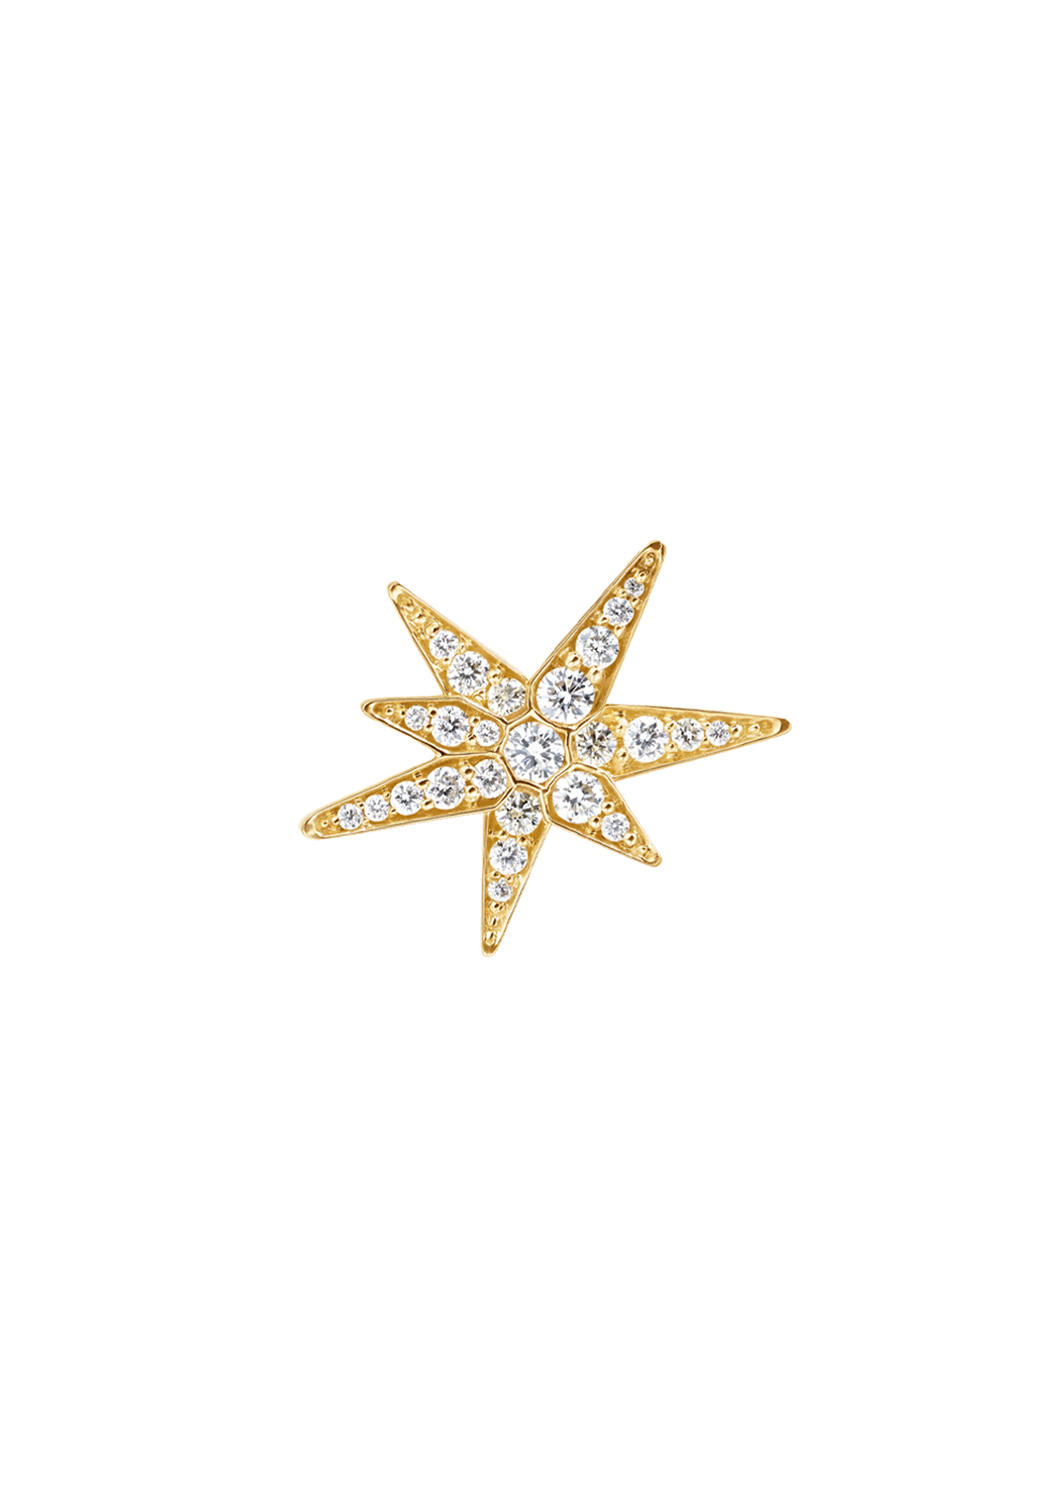 Ole Lynggaard 18KYG Small Funky Stars Diamond Earrings | Left | Ref. A3097-401-L | OsterJewelers.com